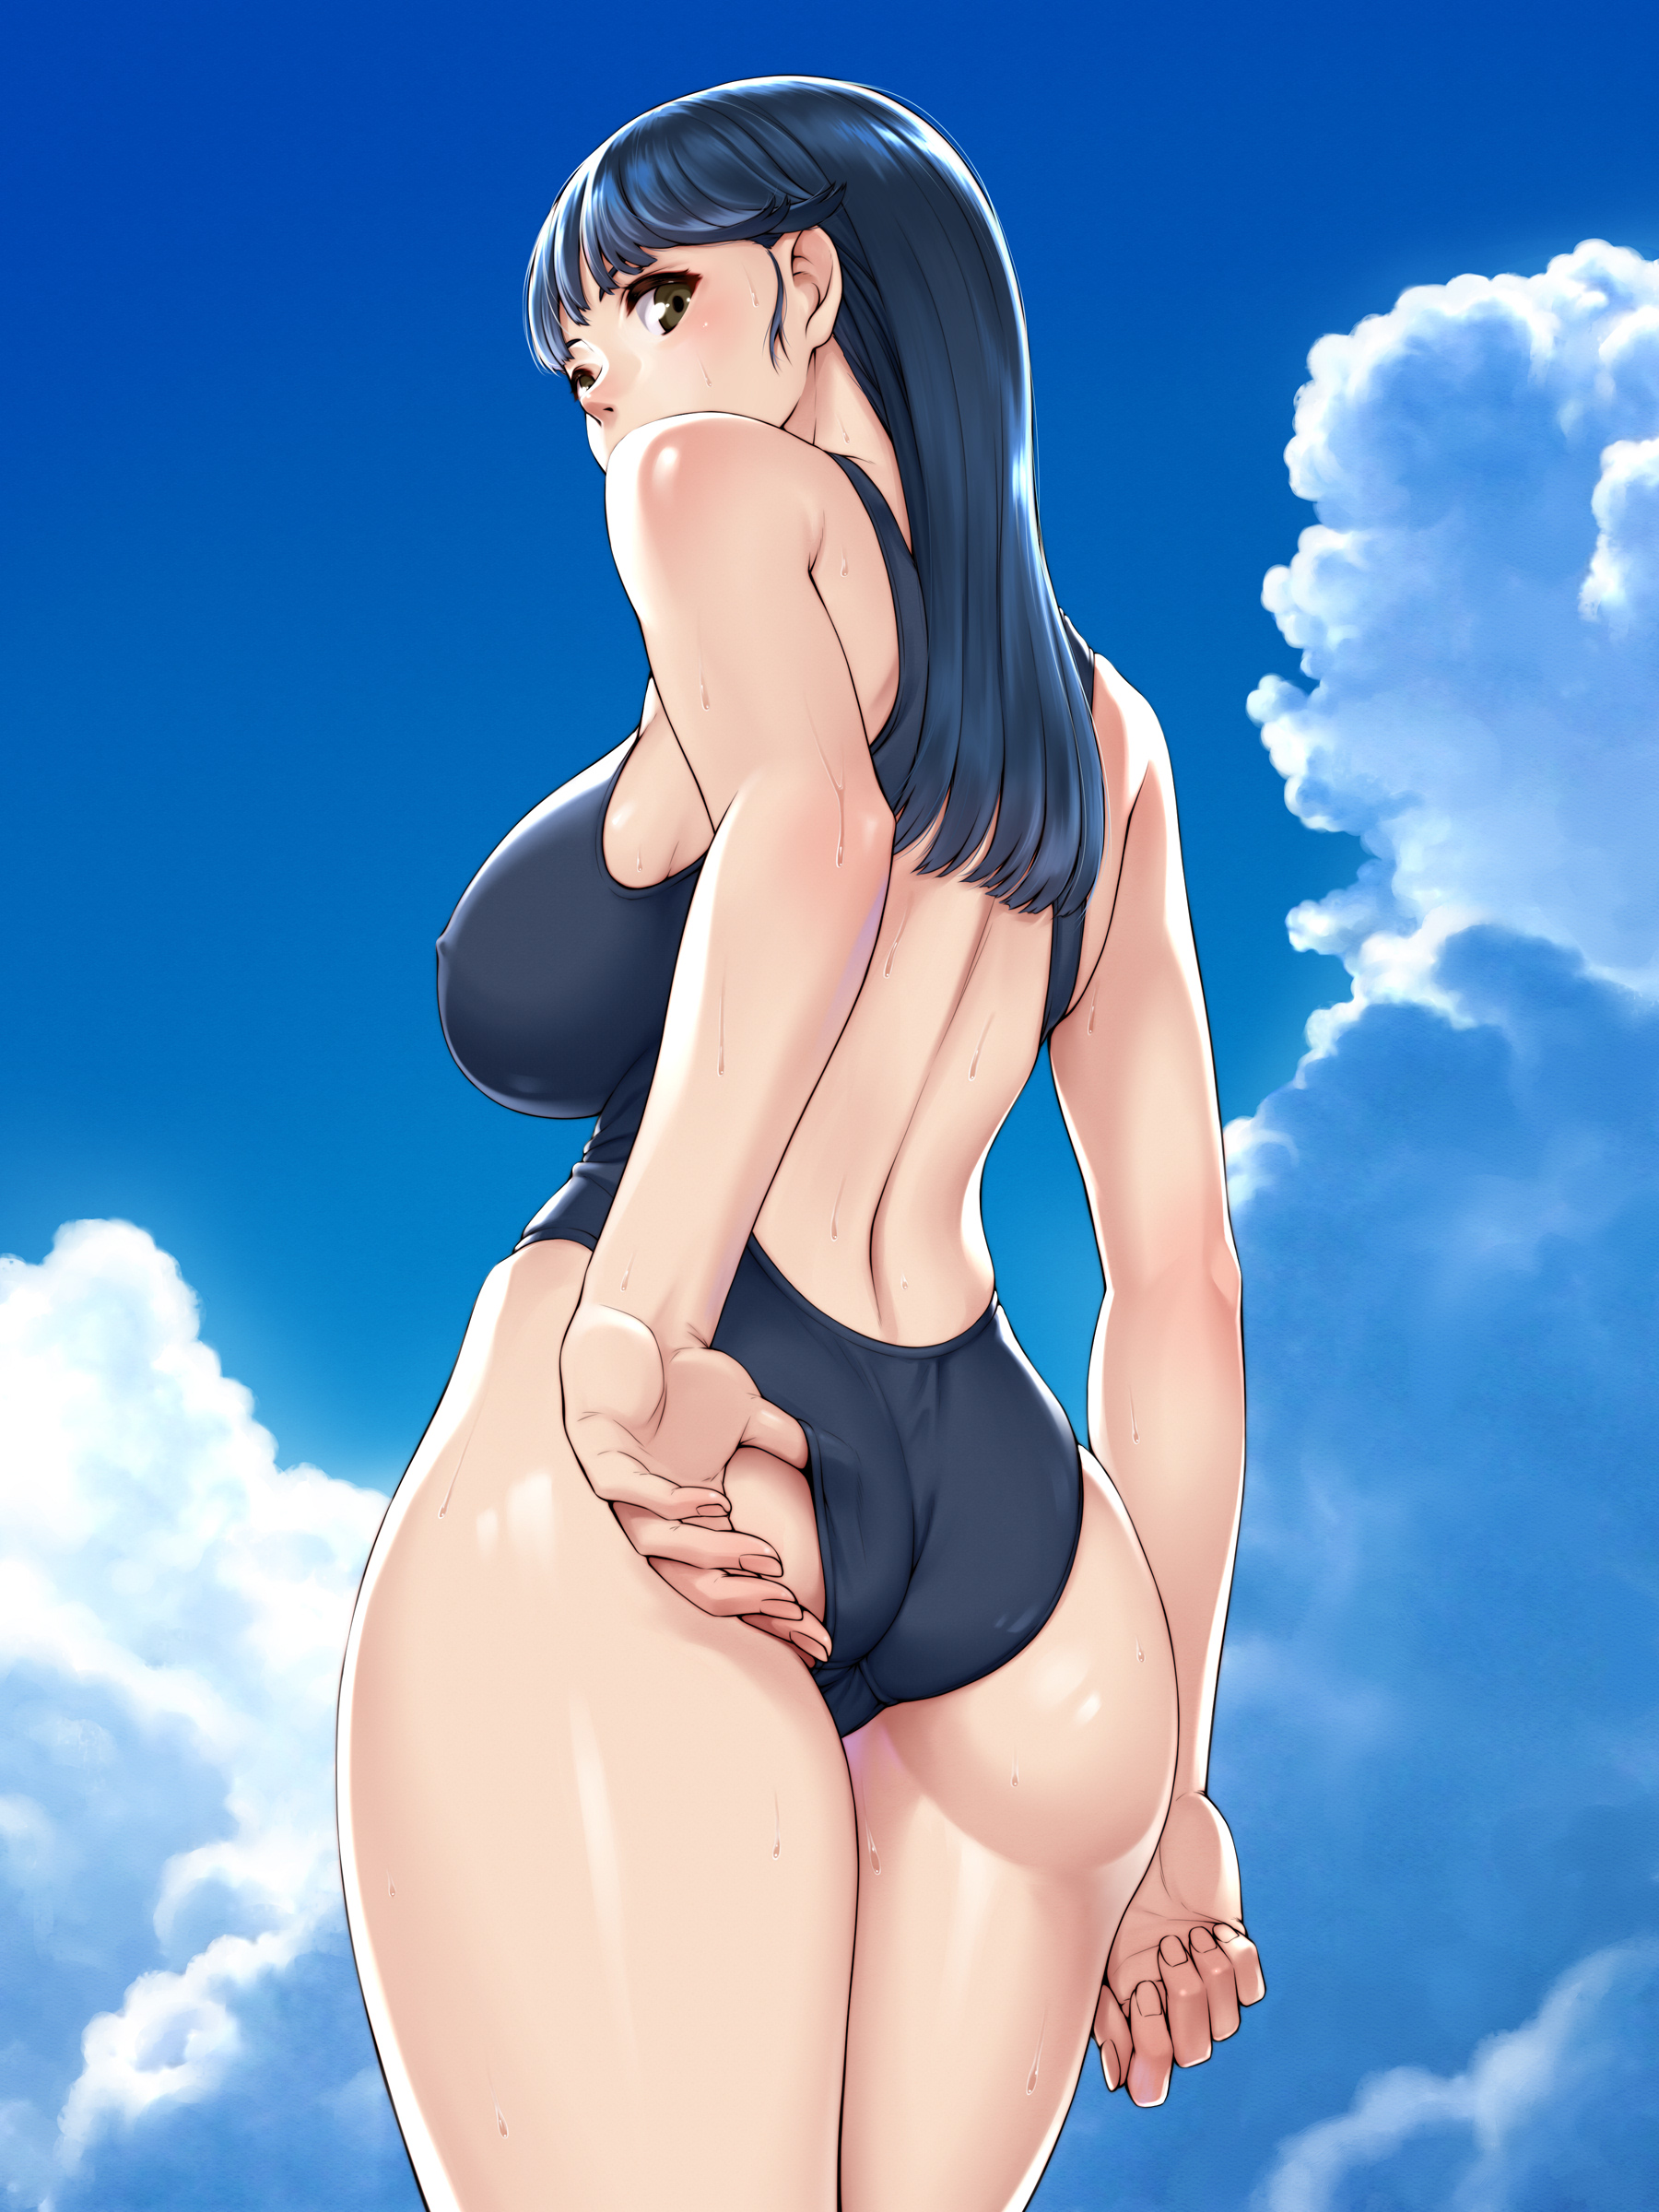 Anime 1800x2400 anime anime girls digital art artwork portrait display 2D swimwear low-angle Fullbottom